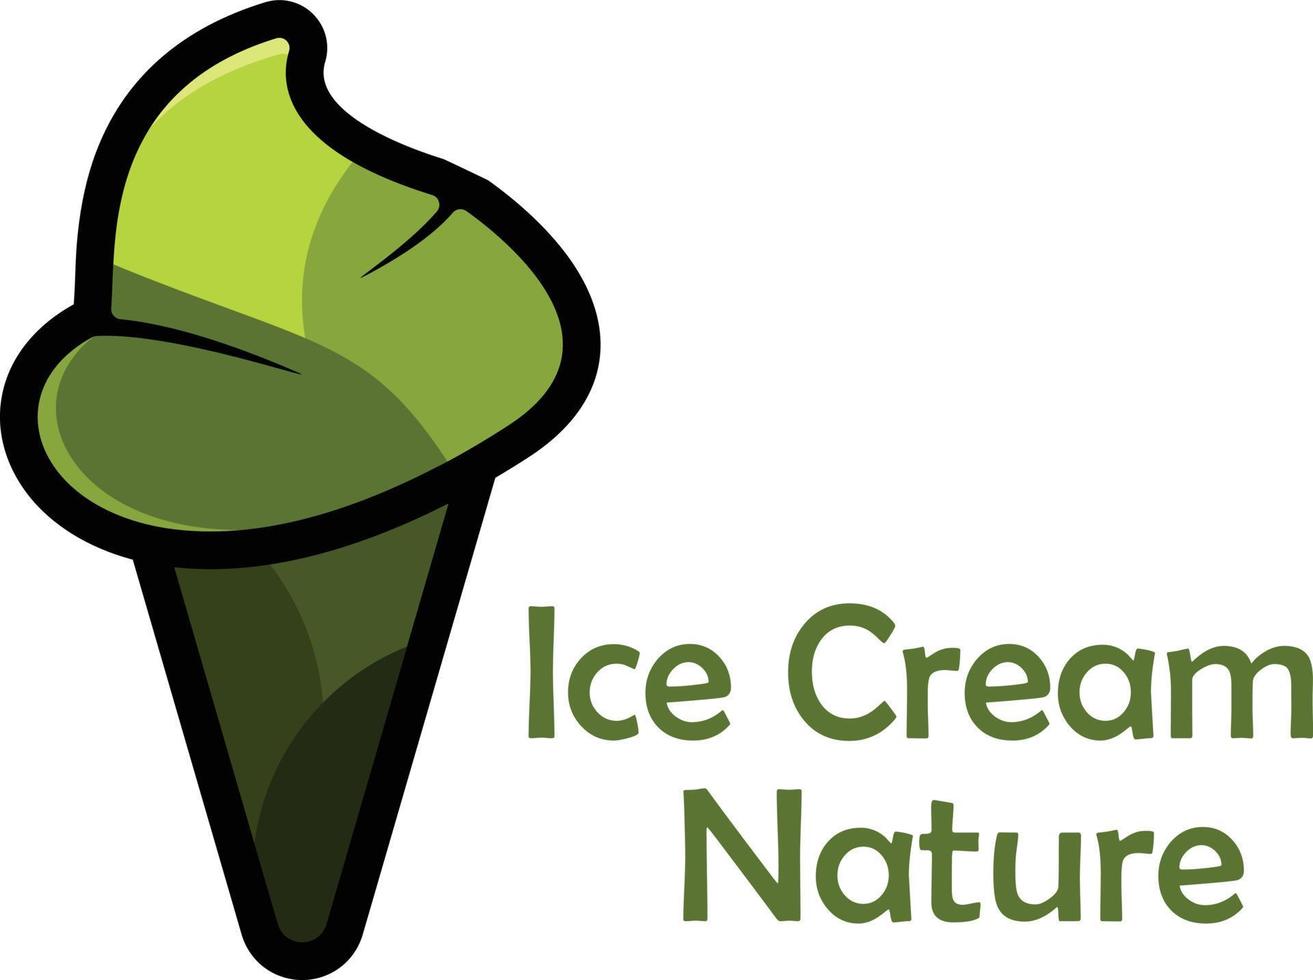 gelo creme logotipo natureza. vetor ilustração